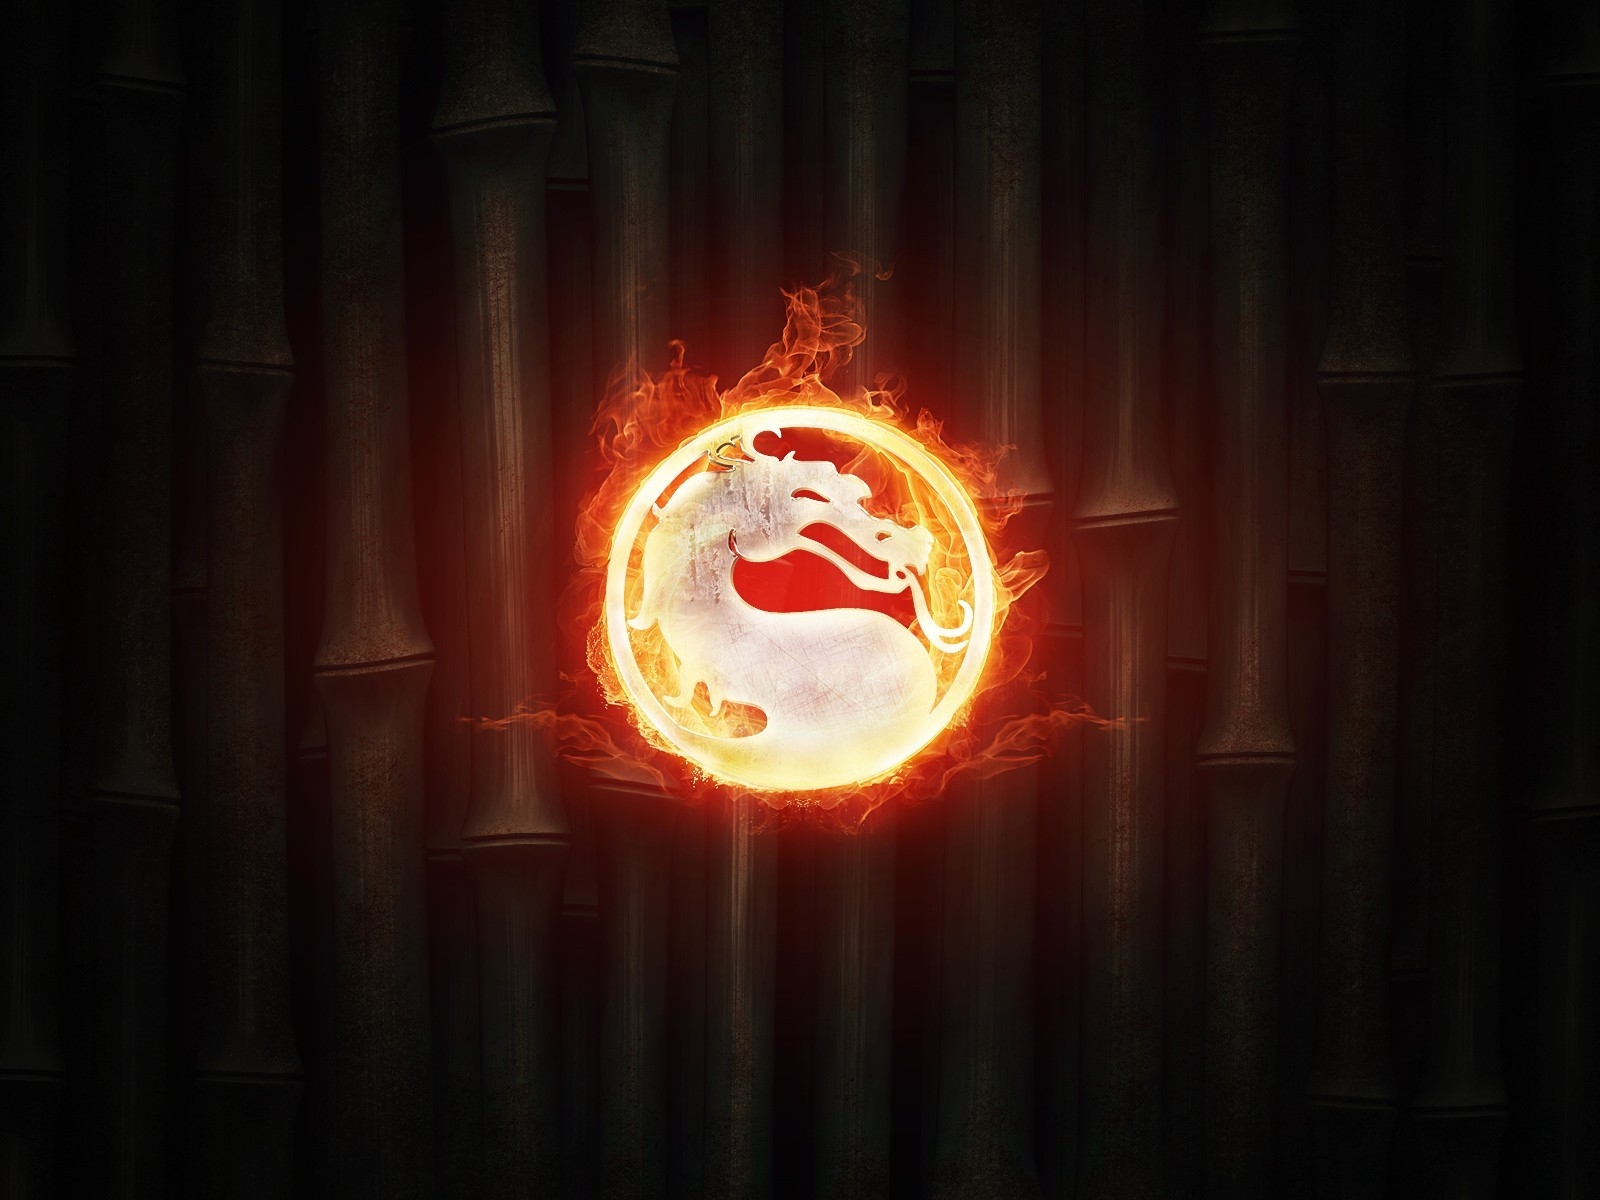 Mortal Kombat Fire for 1600 x 1200 resolution